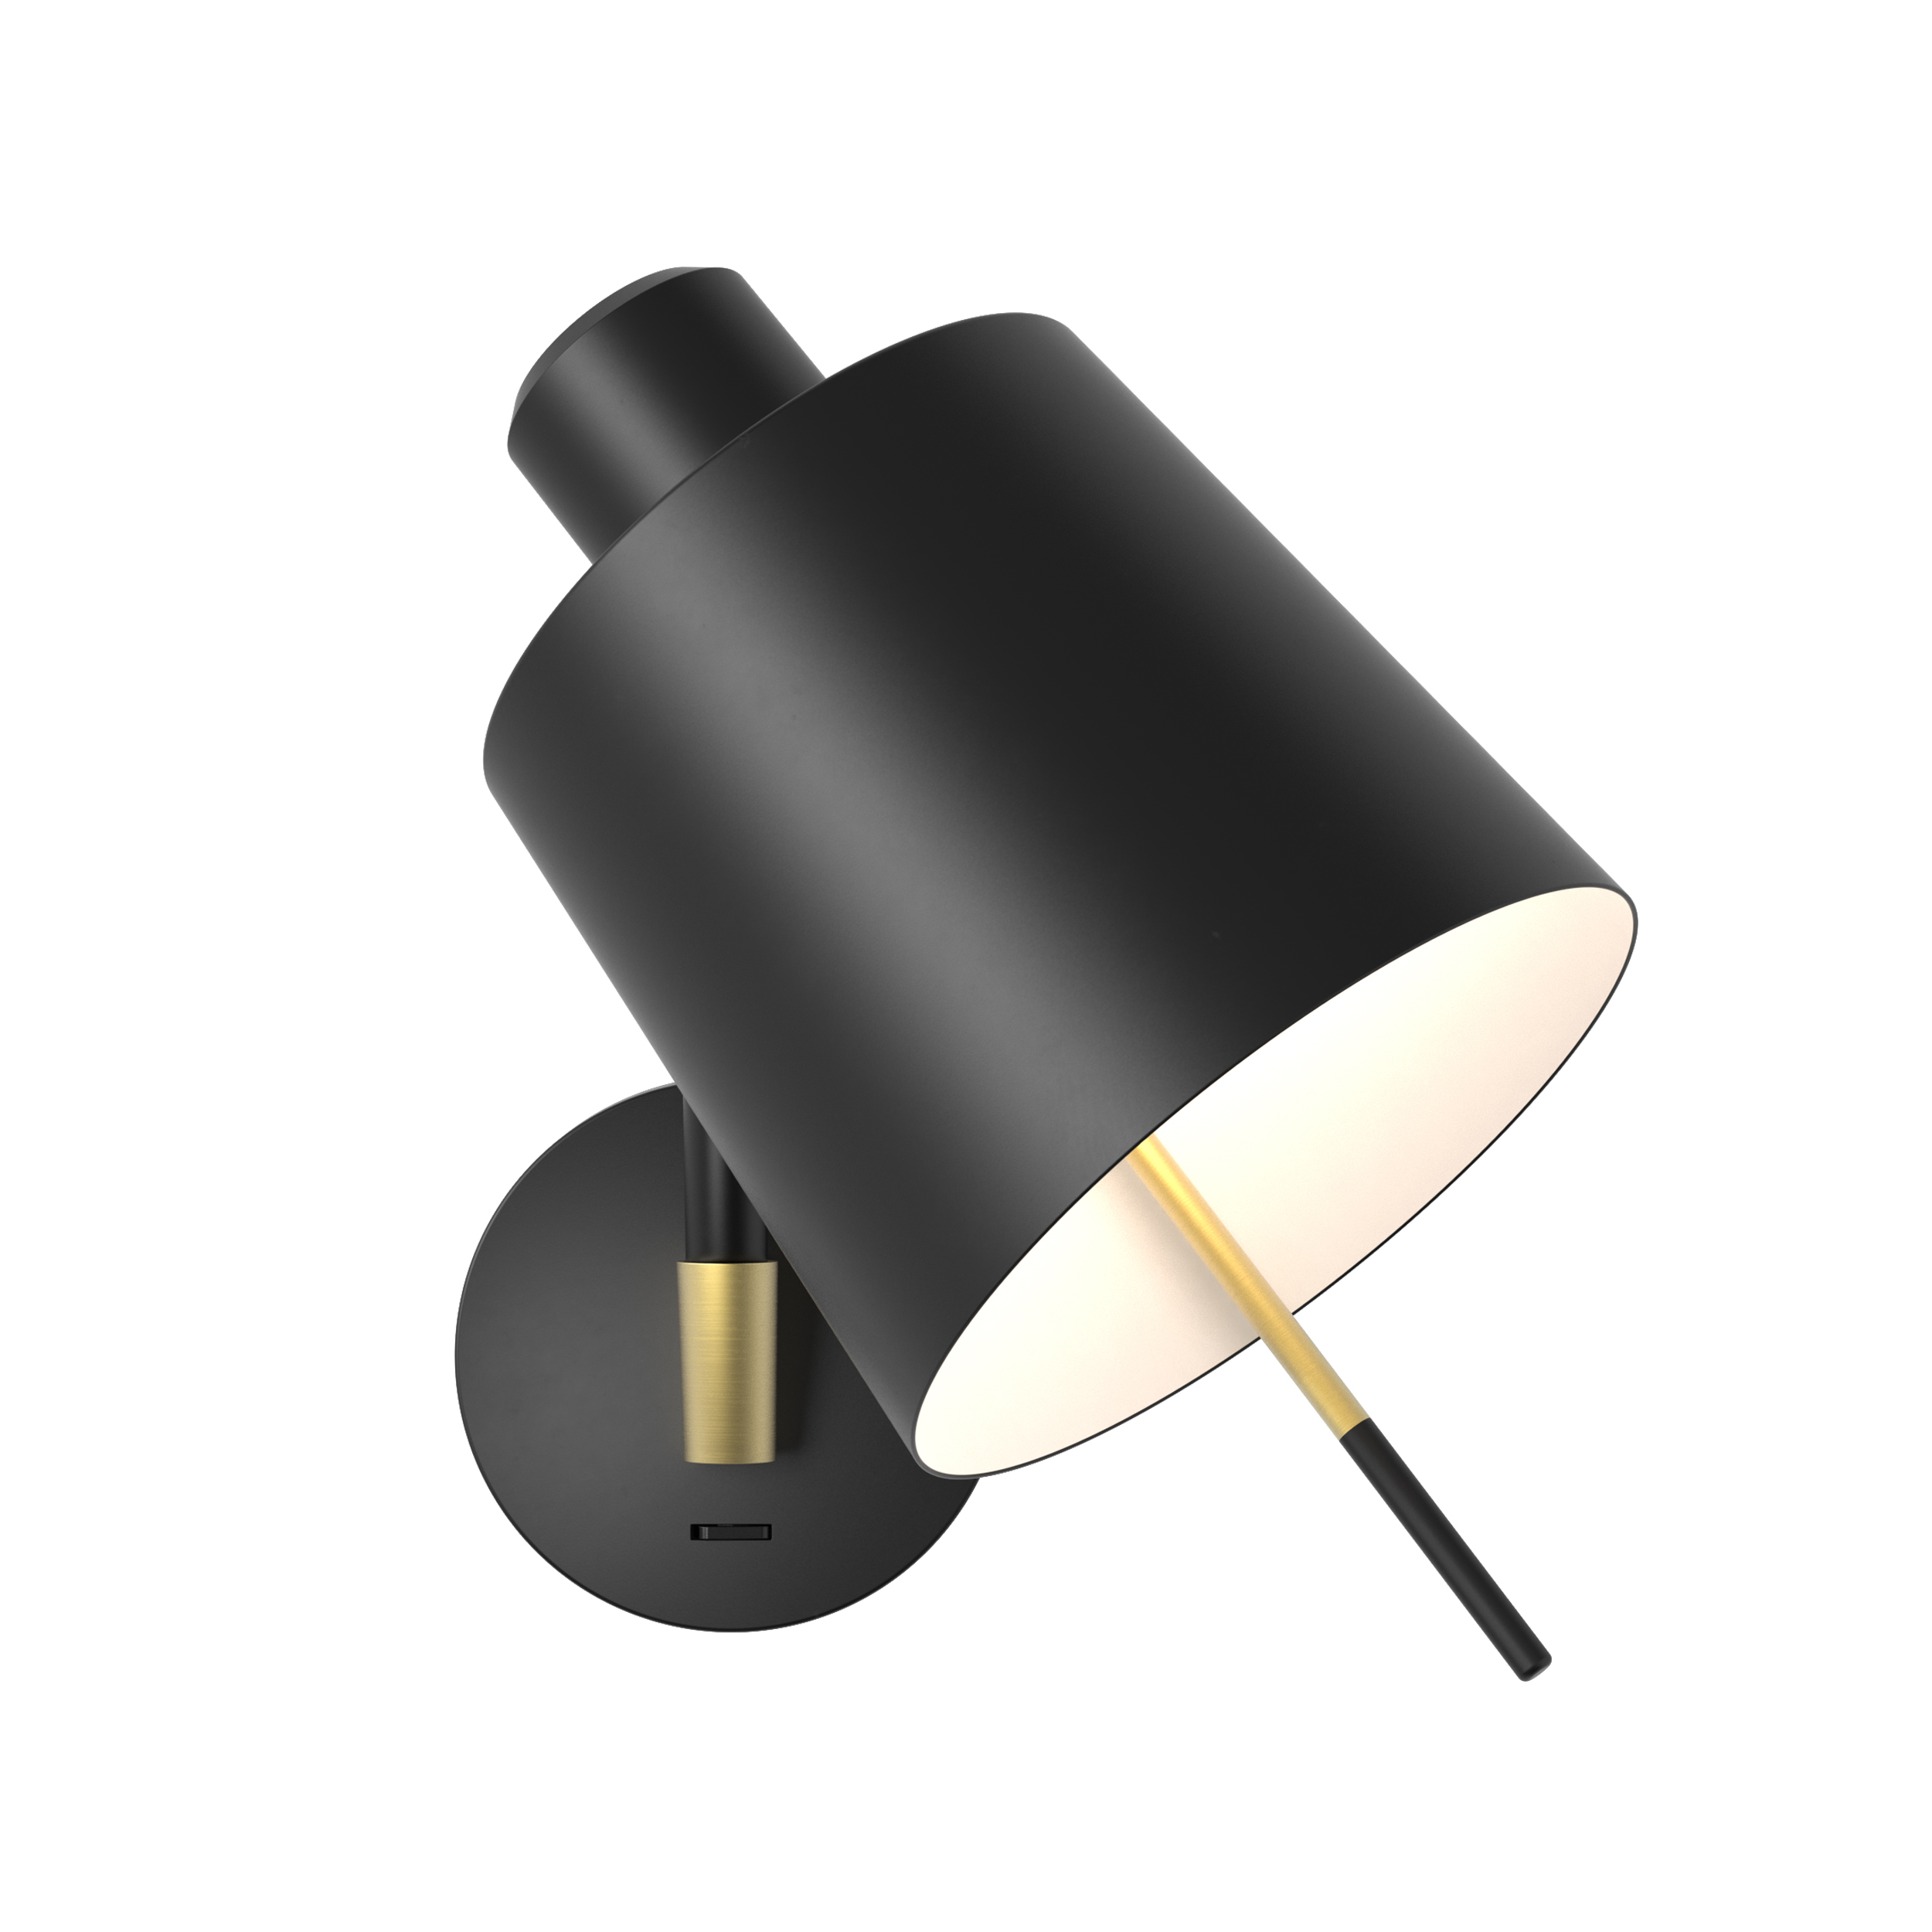 Astro Edward Wall Switched wandlamp mat zwart